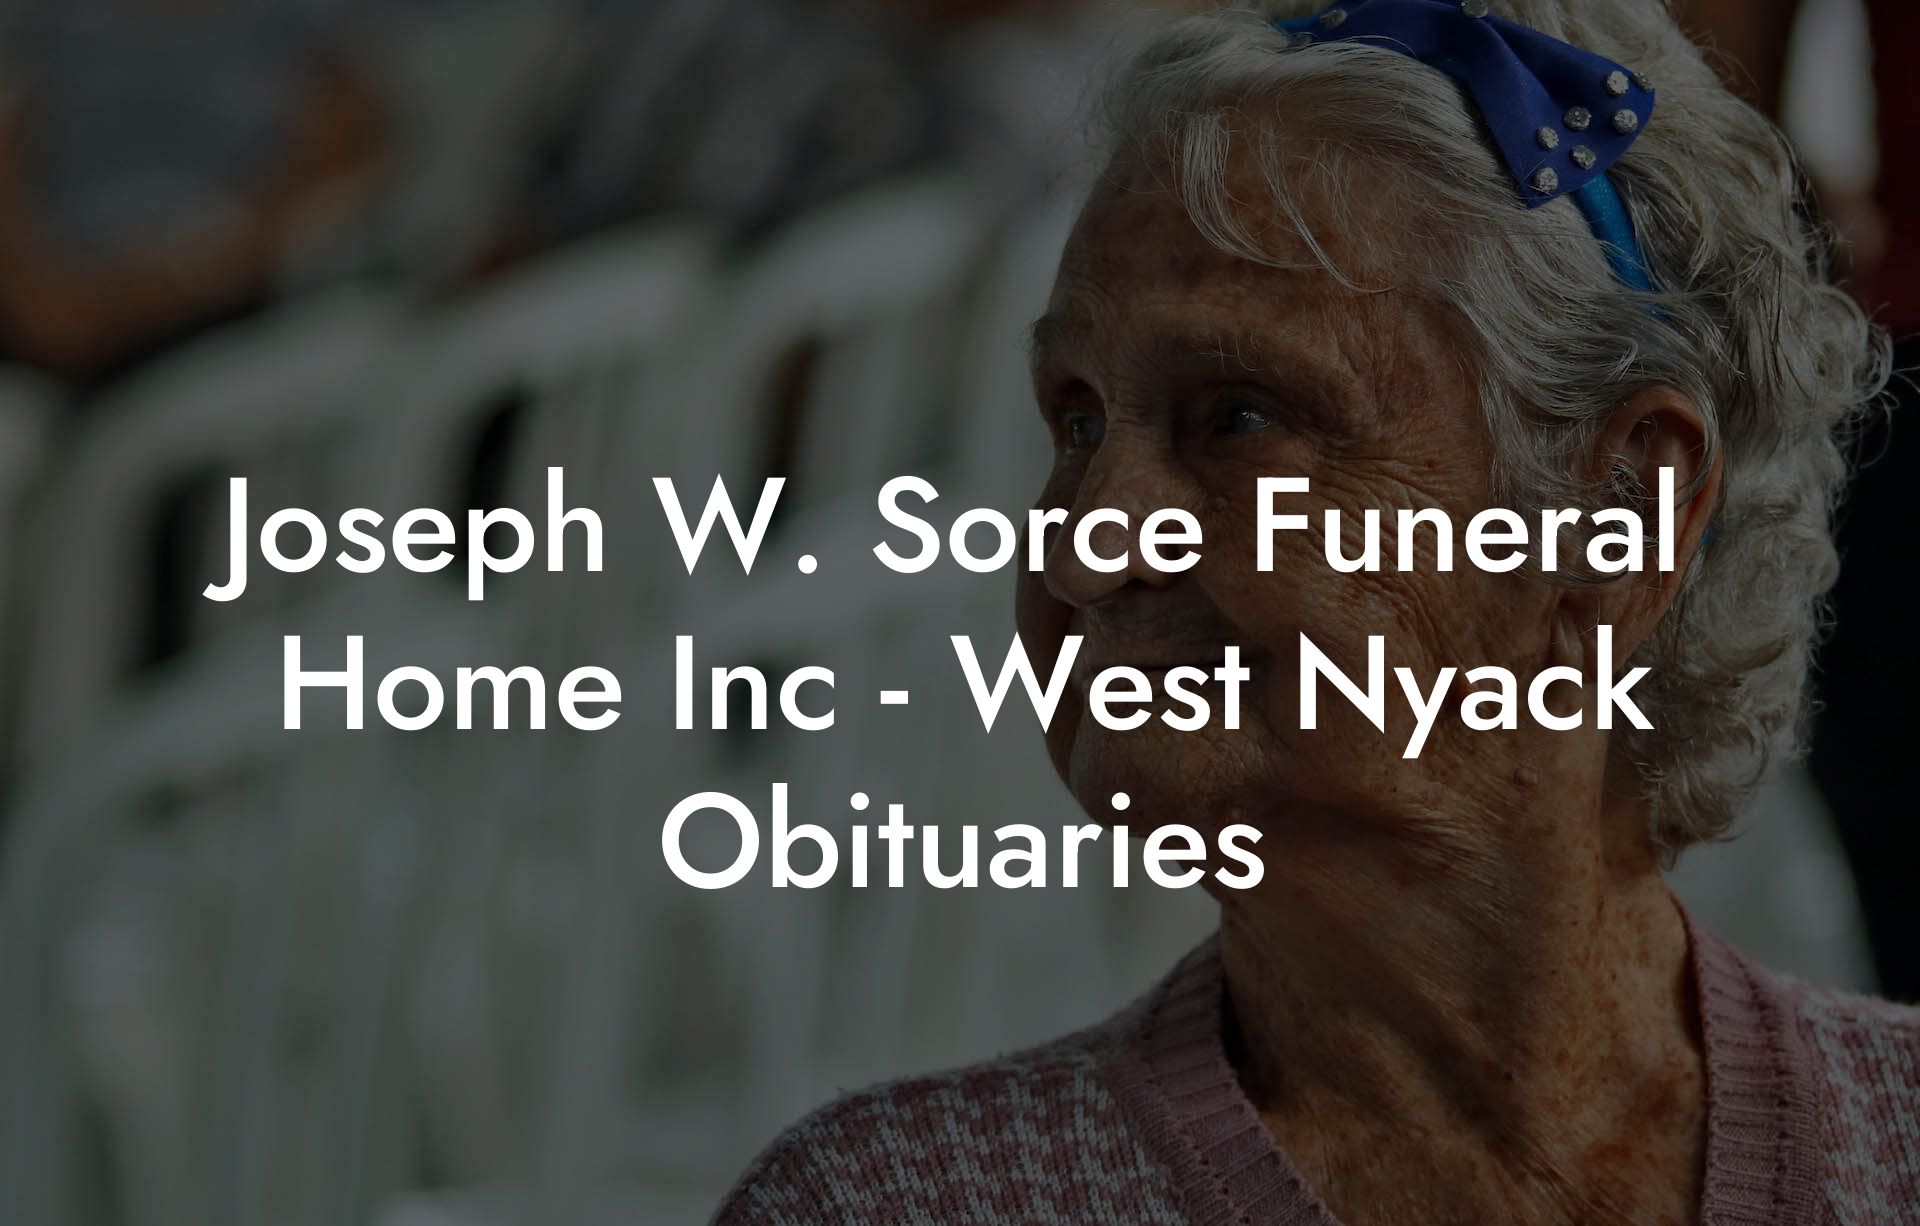 Joseph W. Sorce Funeral Home Inc - West Nyack Obituaries